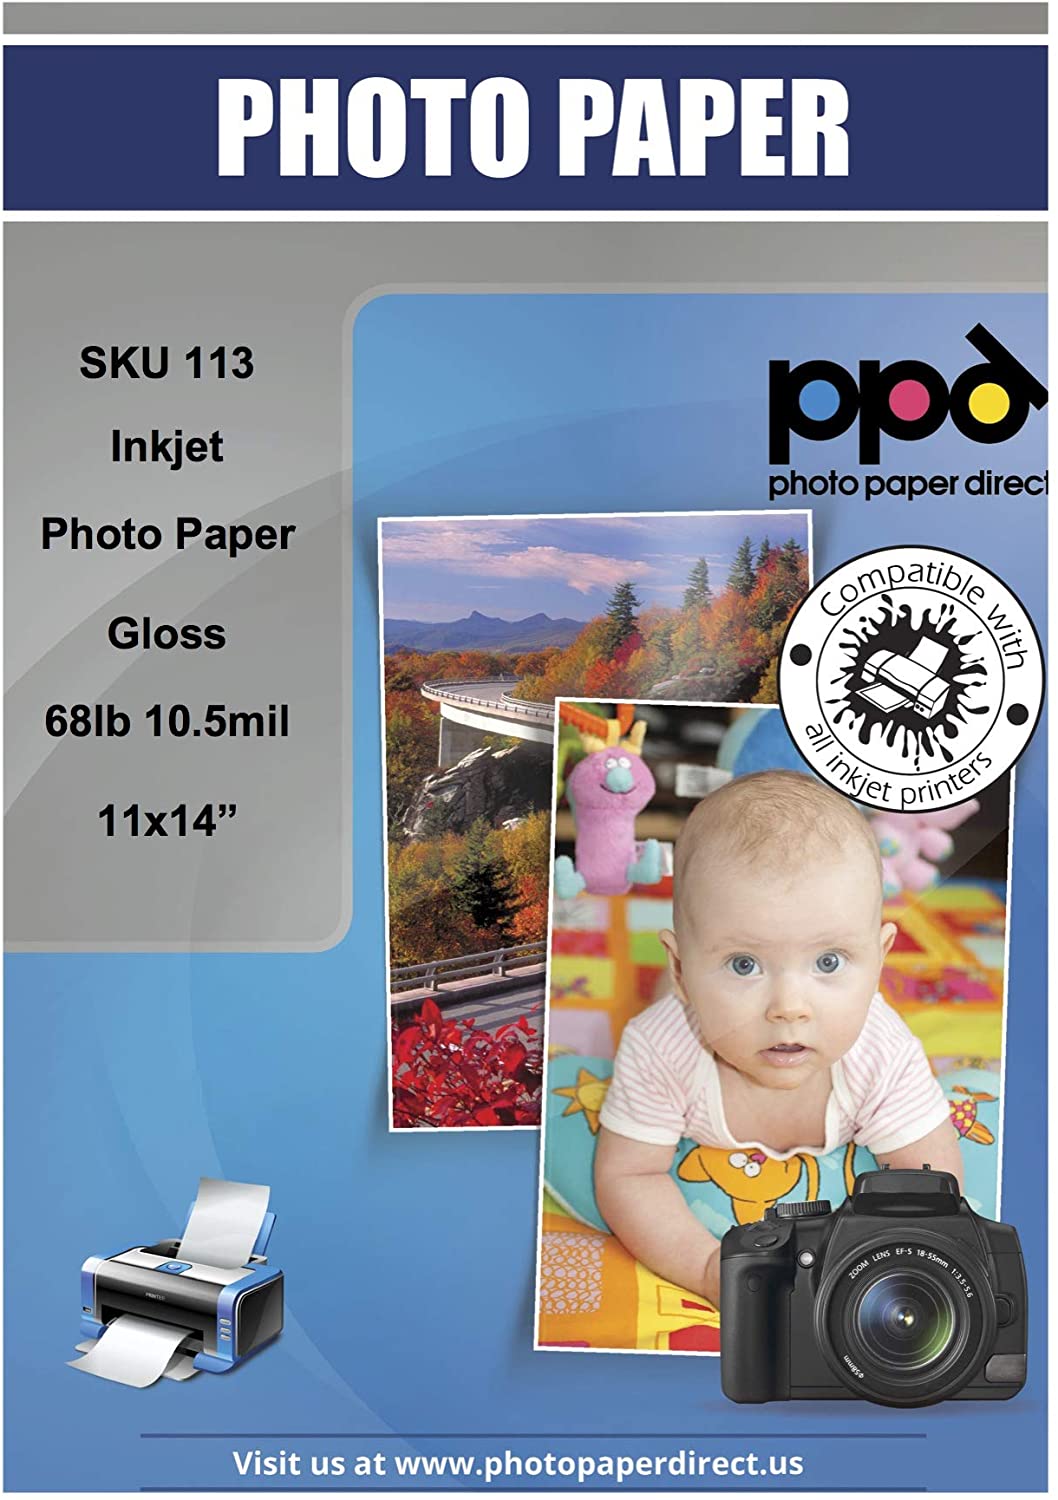 Inkjet Premium Photo Paper Glossy 68lb. 255gsm 10.5mil 11 x 14" PPD-113